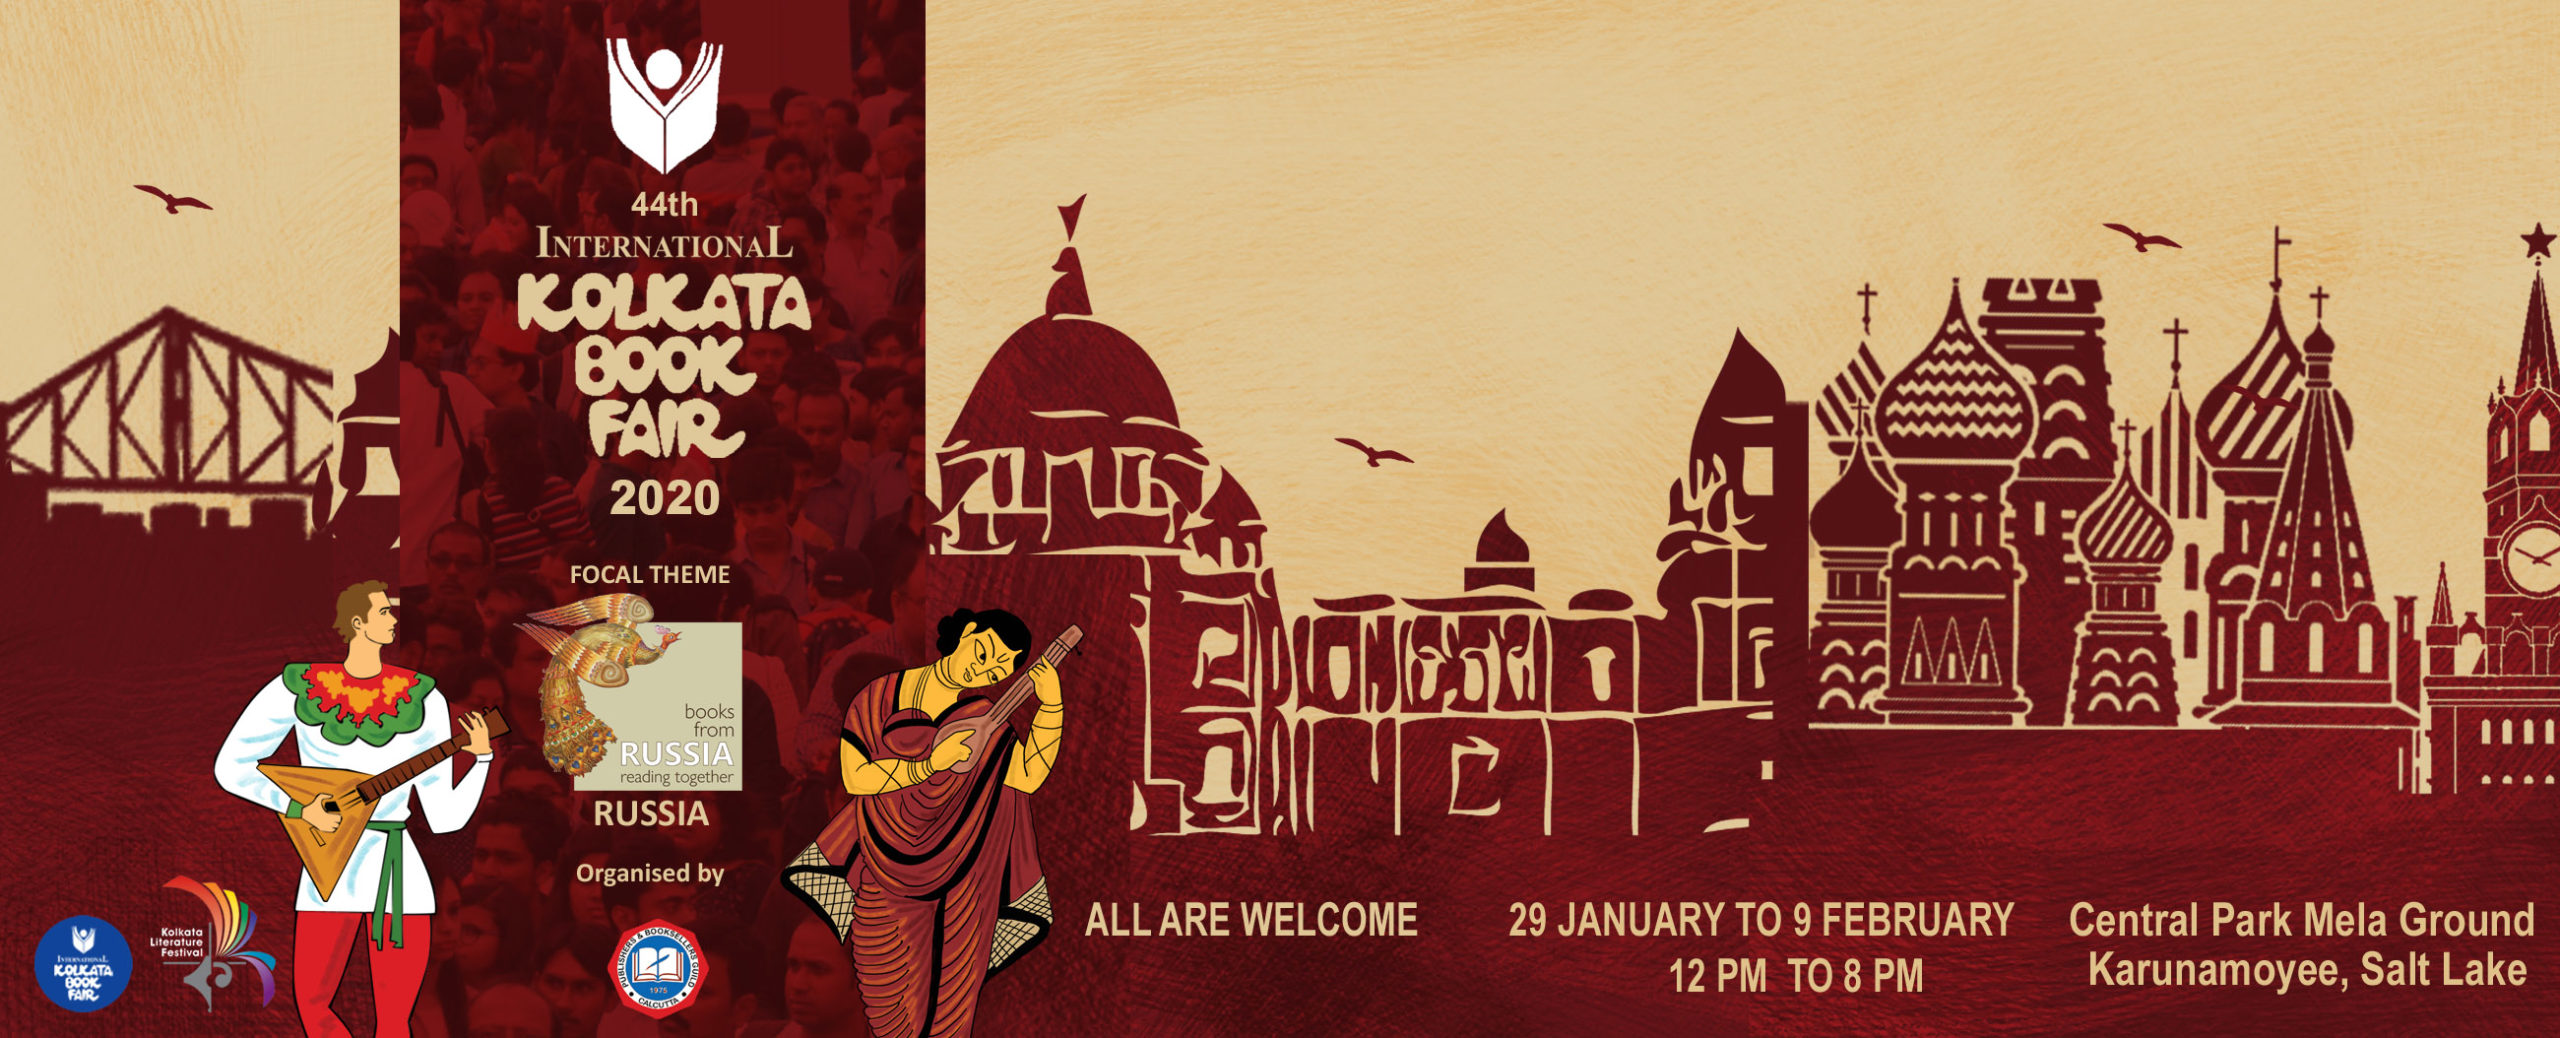 The last leg of Kolkata Literature Festival is ready to kick start from 7th Feb 2020